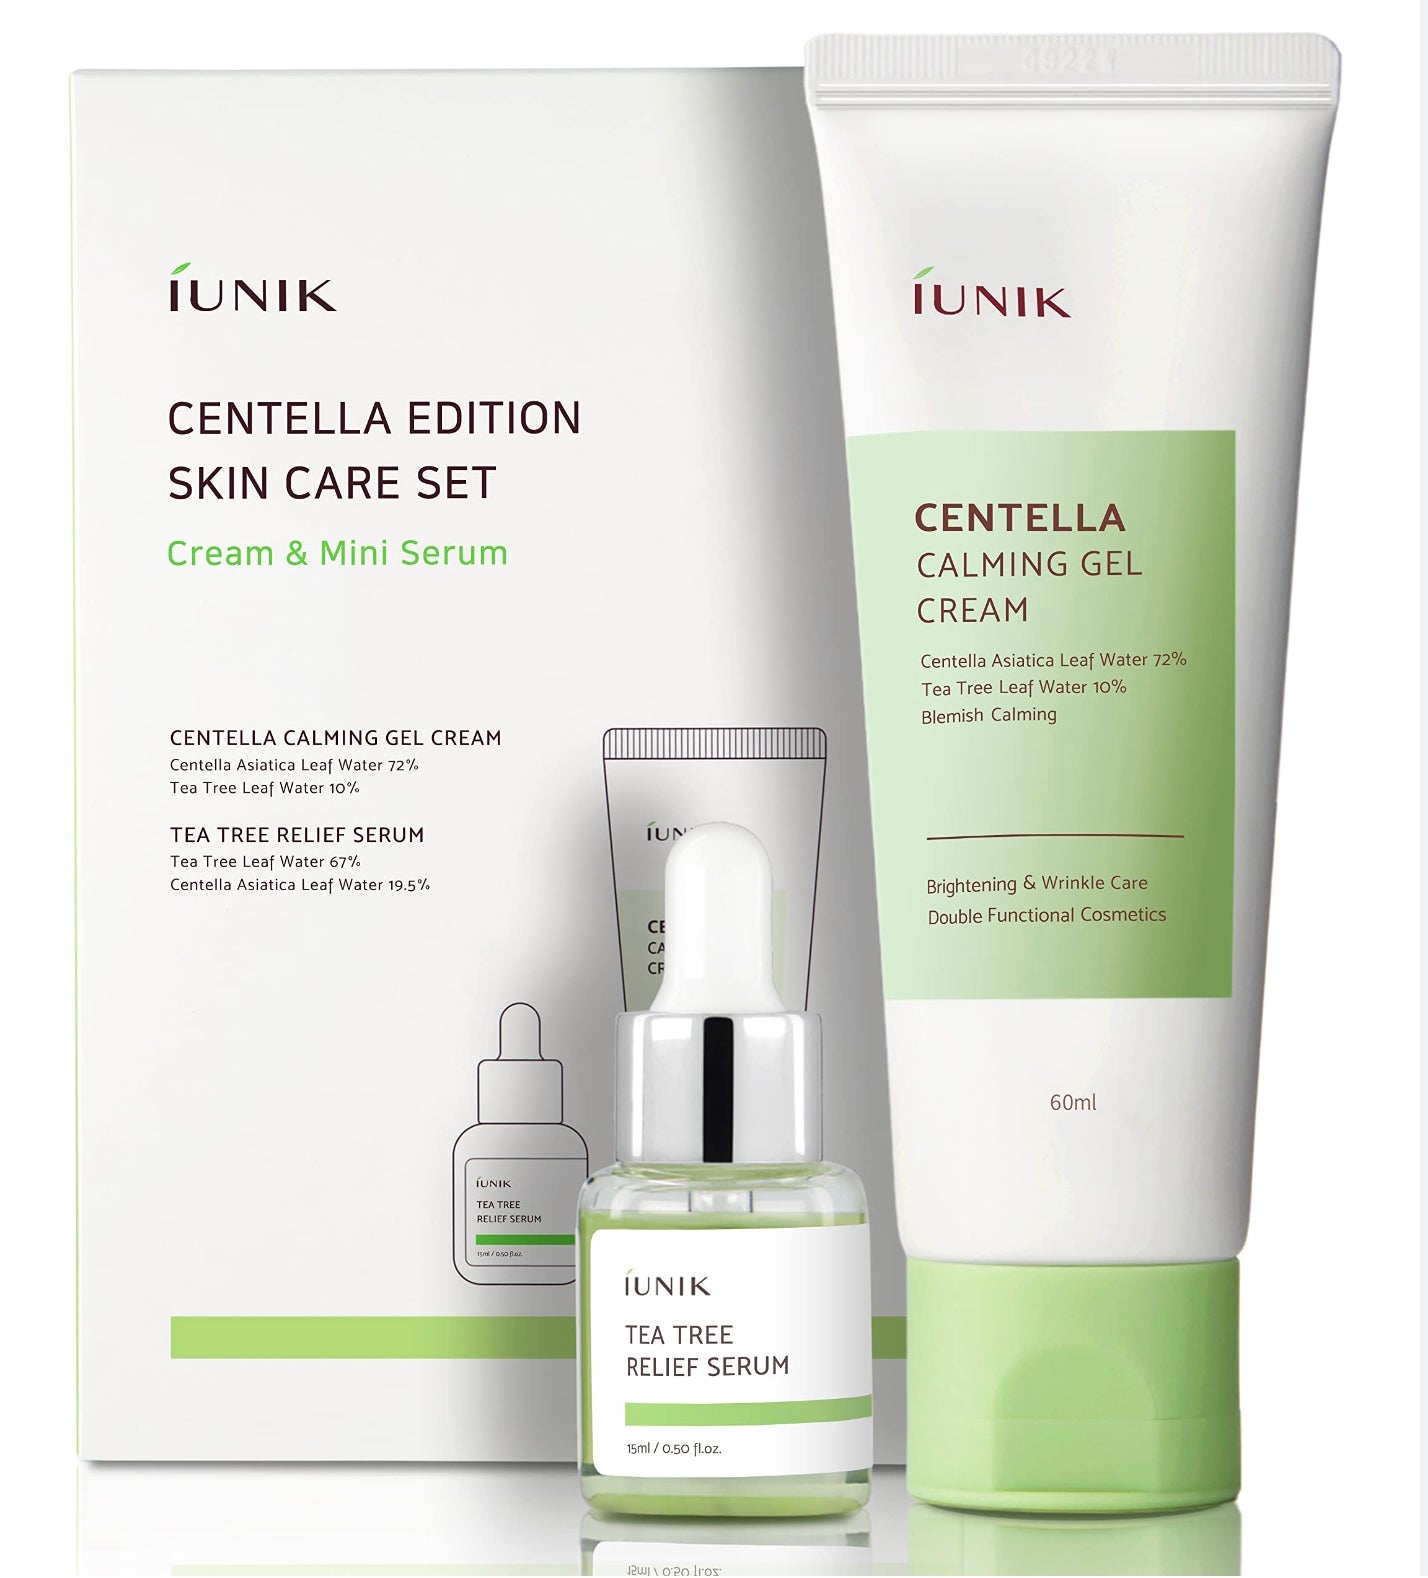 IUNIK Centella Edition Skincare Set